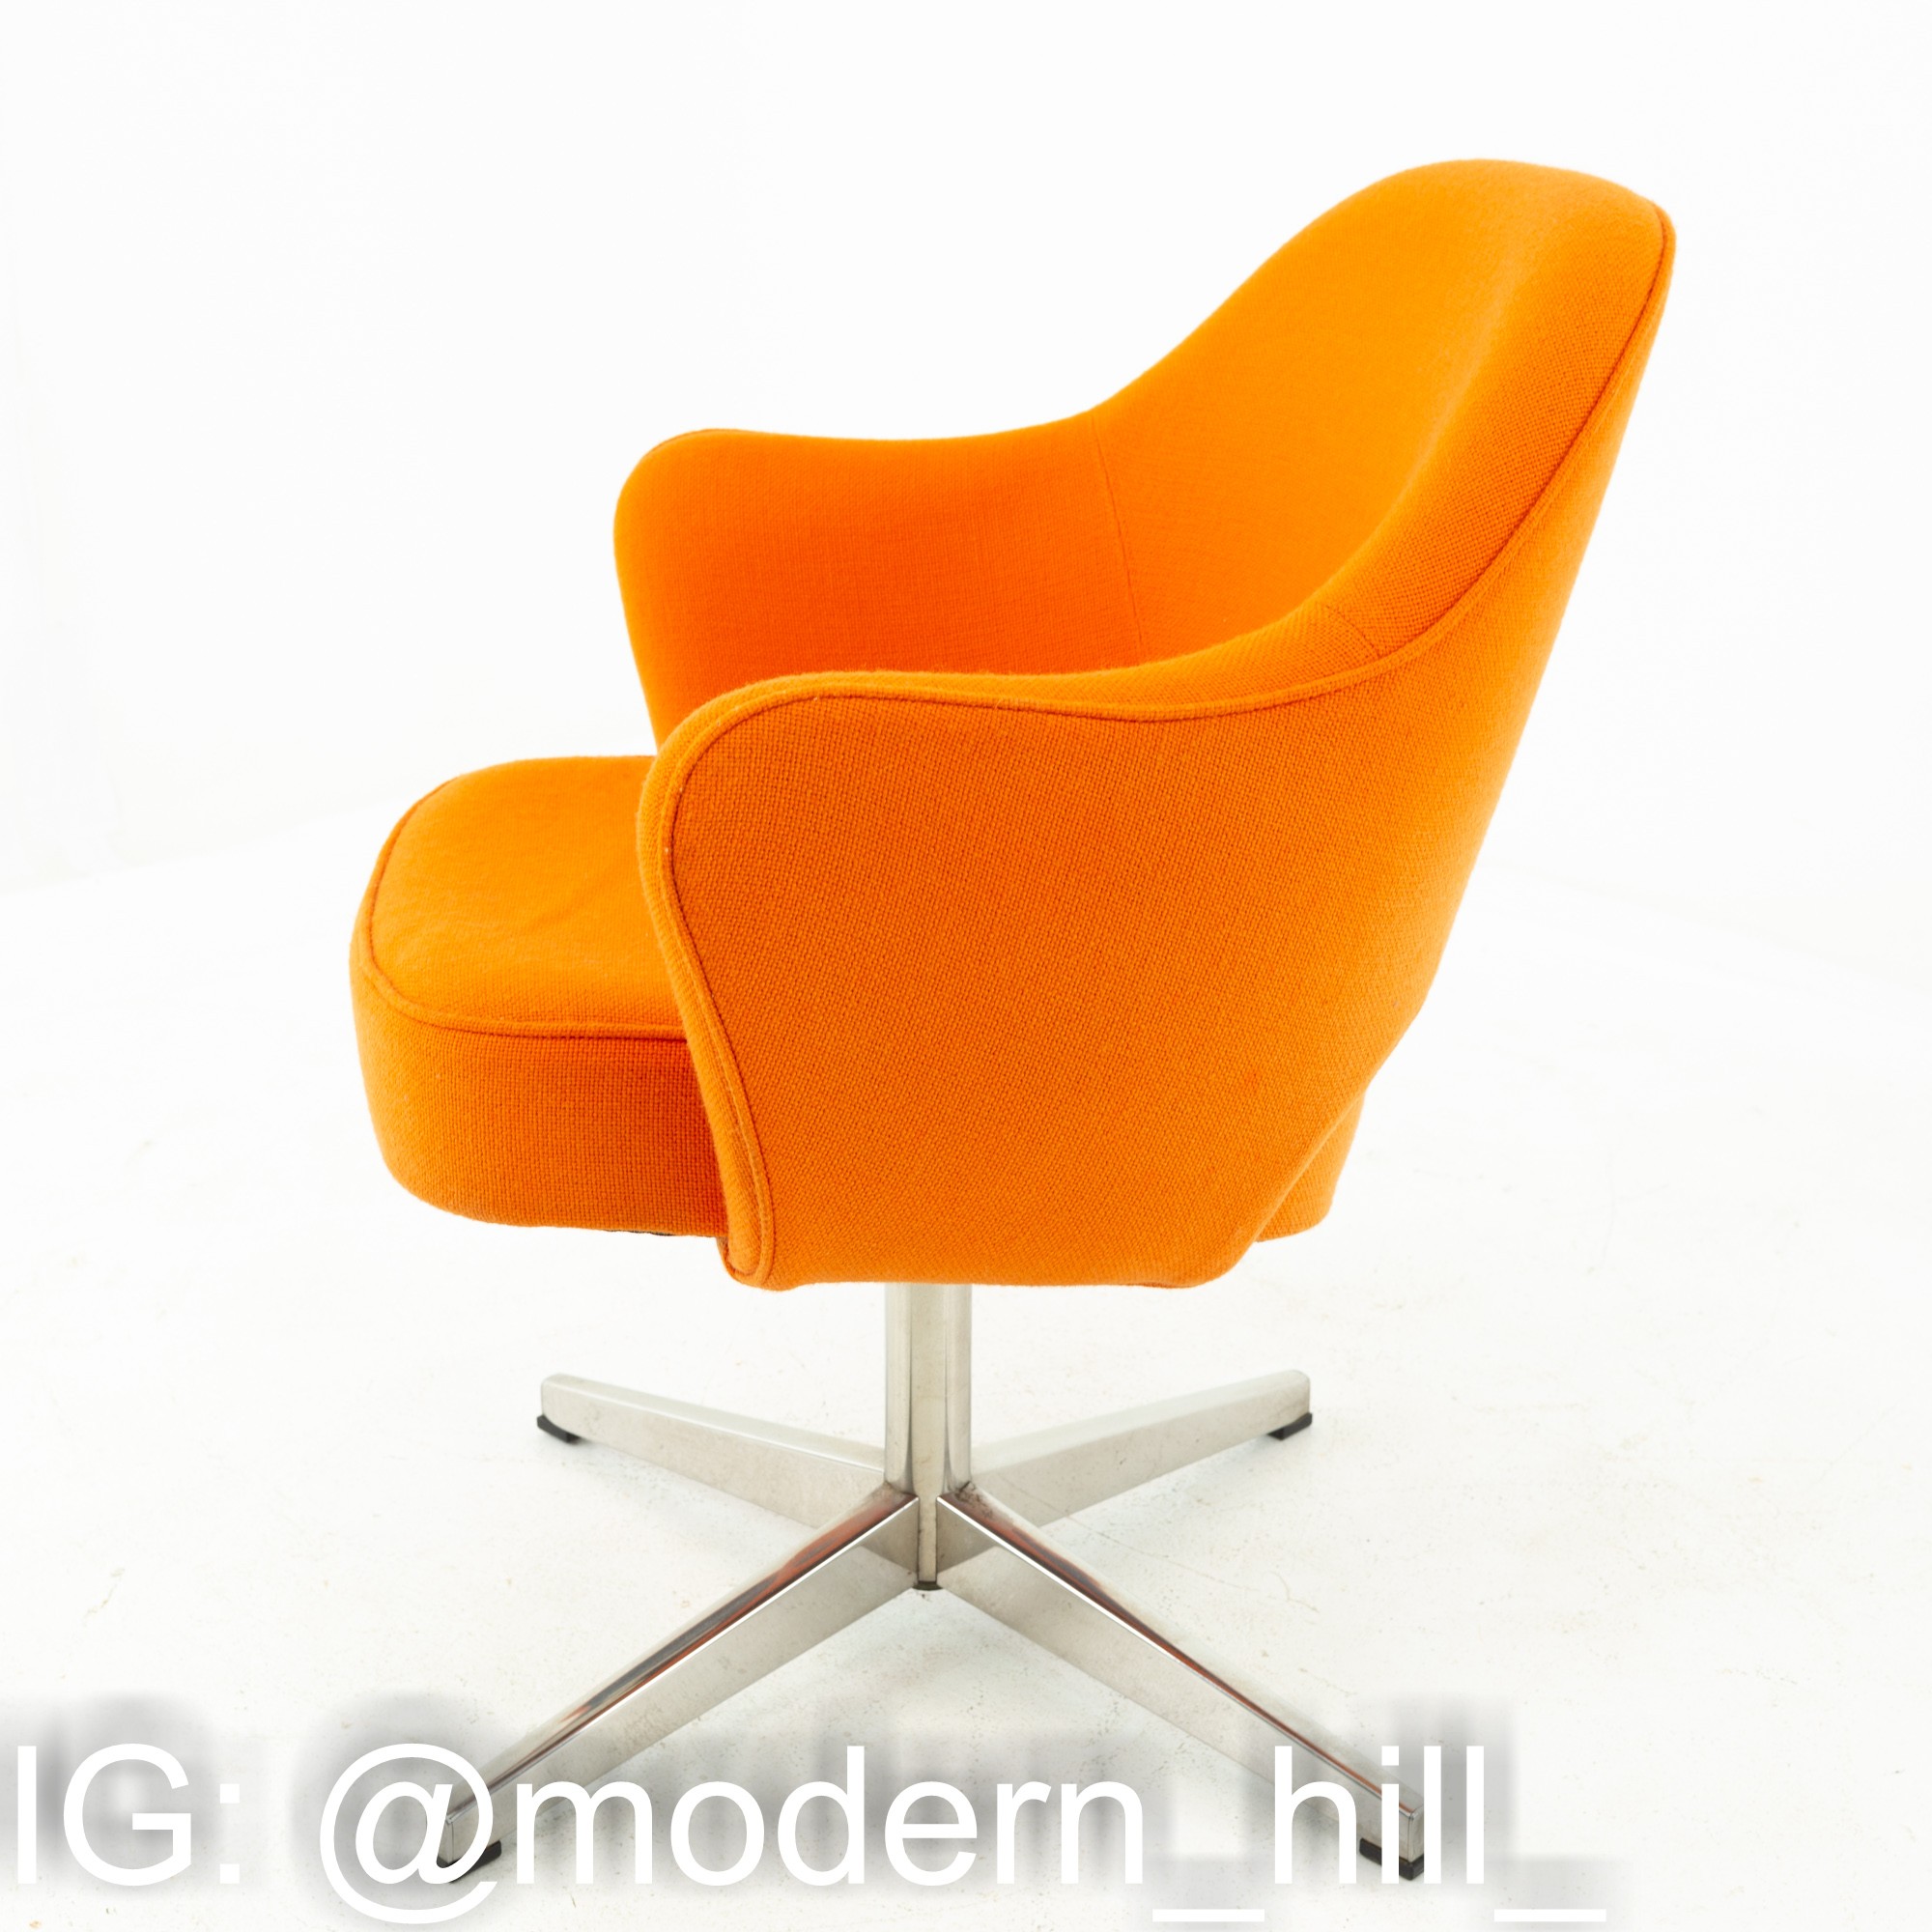 Eero Saarinen for Knoll Mid Century Orange Tweed Executive Office Dining Chairs - Set of 6